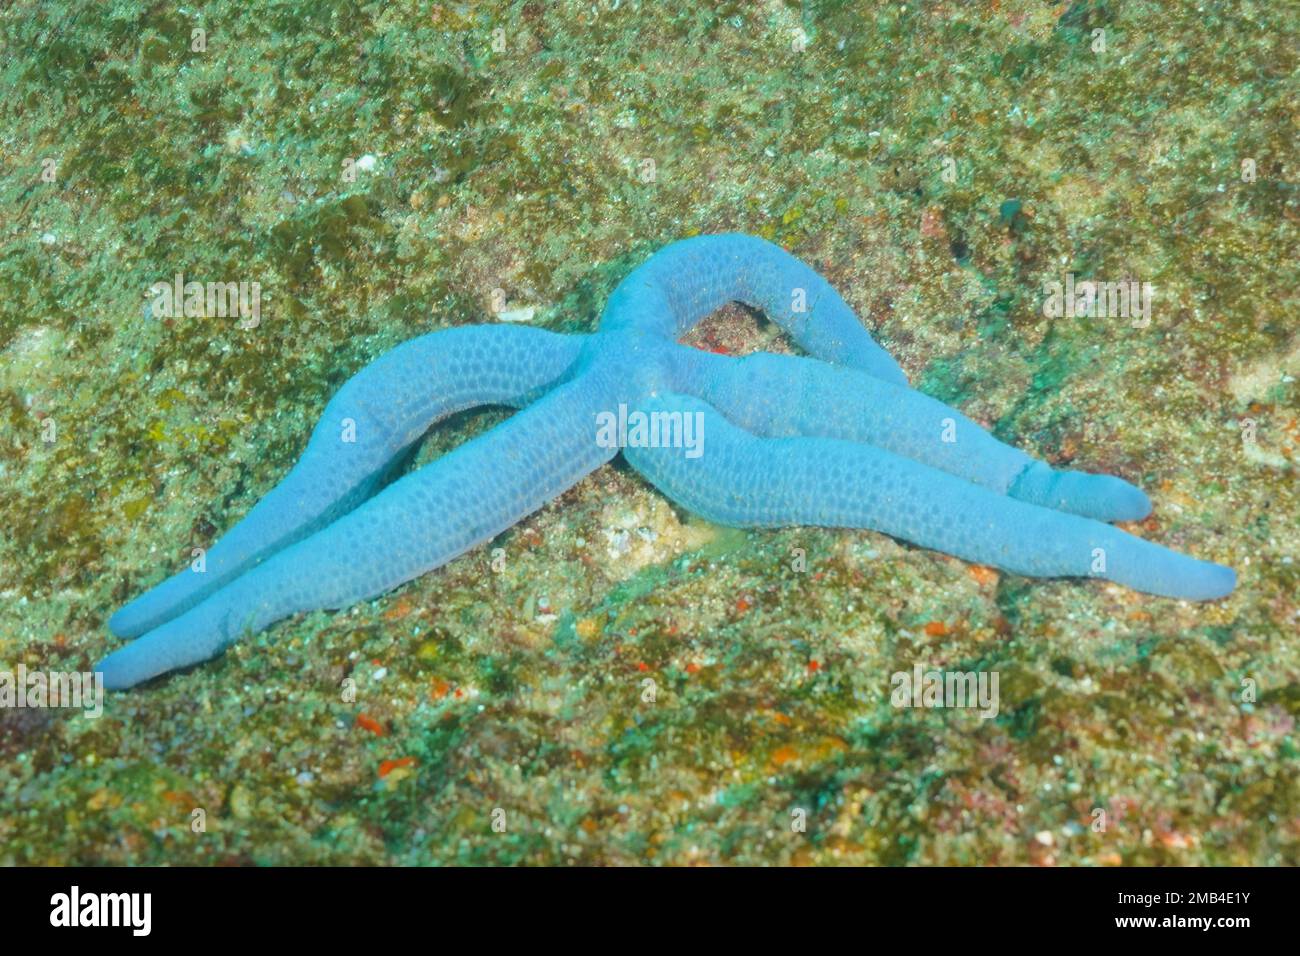 Blaue Linckia (Linckia laevigata), blaue Färbung. Aliwal Shoal Dive Site, Umkomaas, KwaZulu Natal, Südafrika Stockfoto